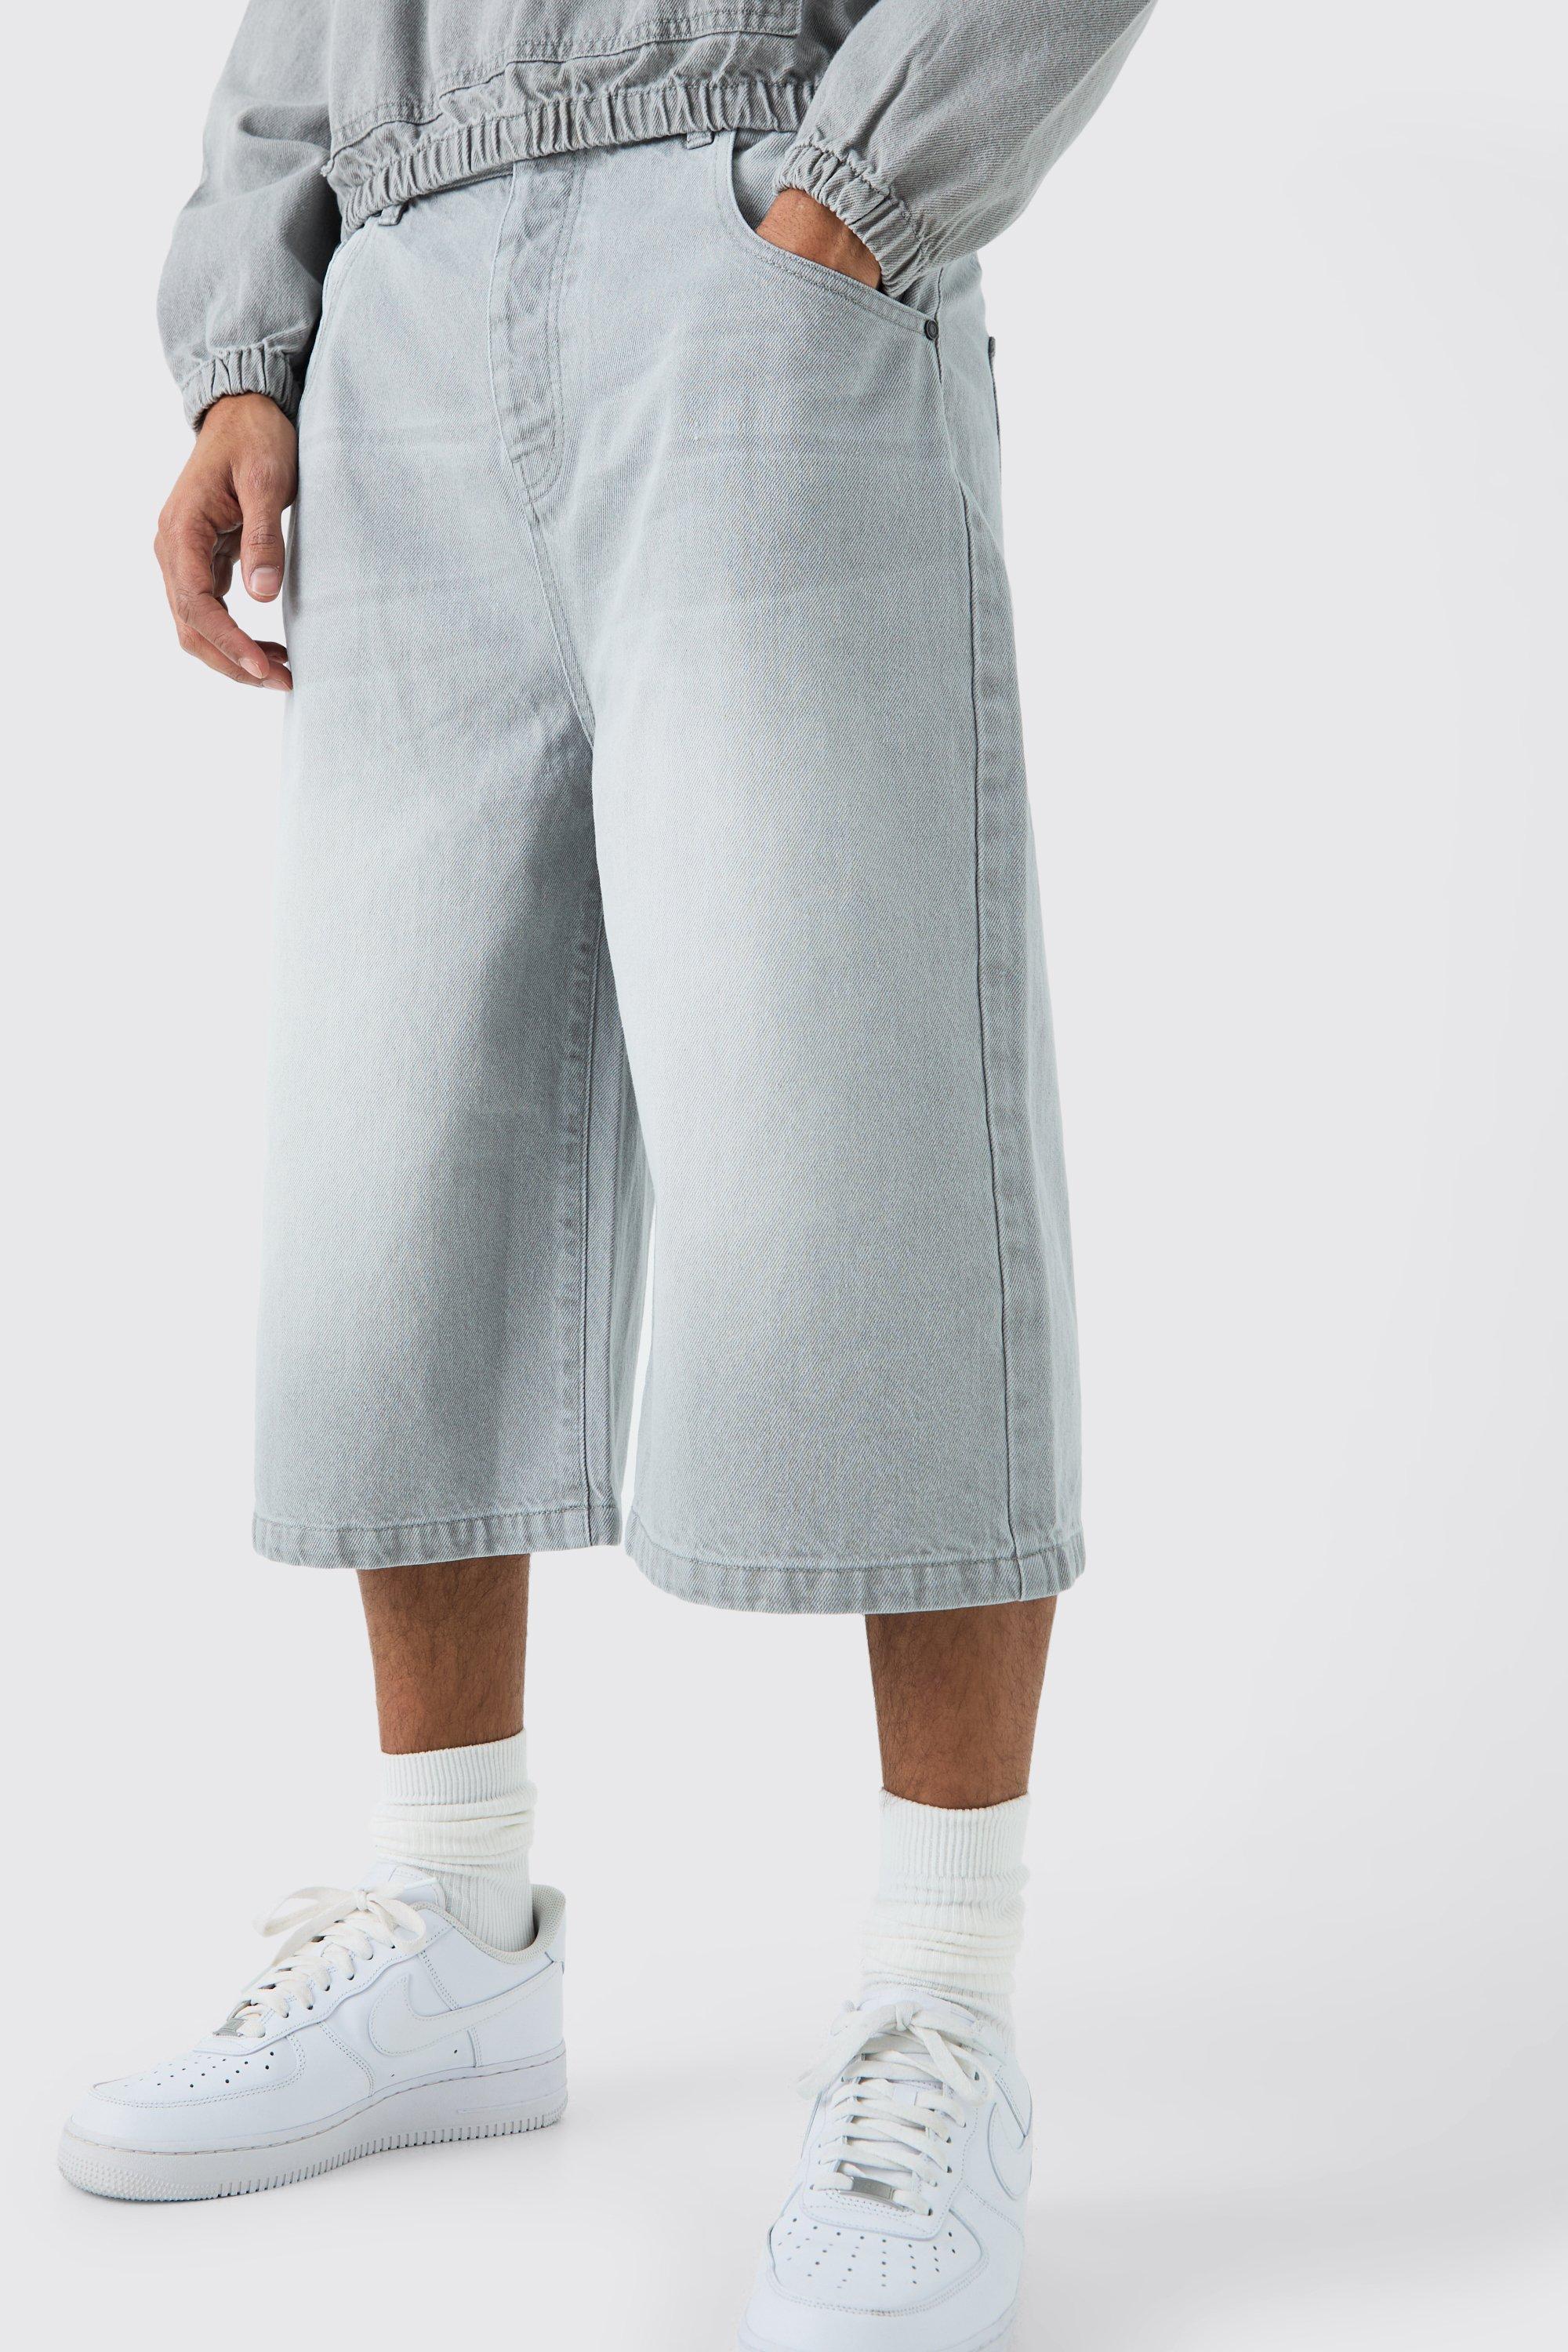 Image of Pantaloni tuta lunghi in denim in lavaggio grigio, Grigio